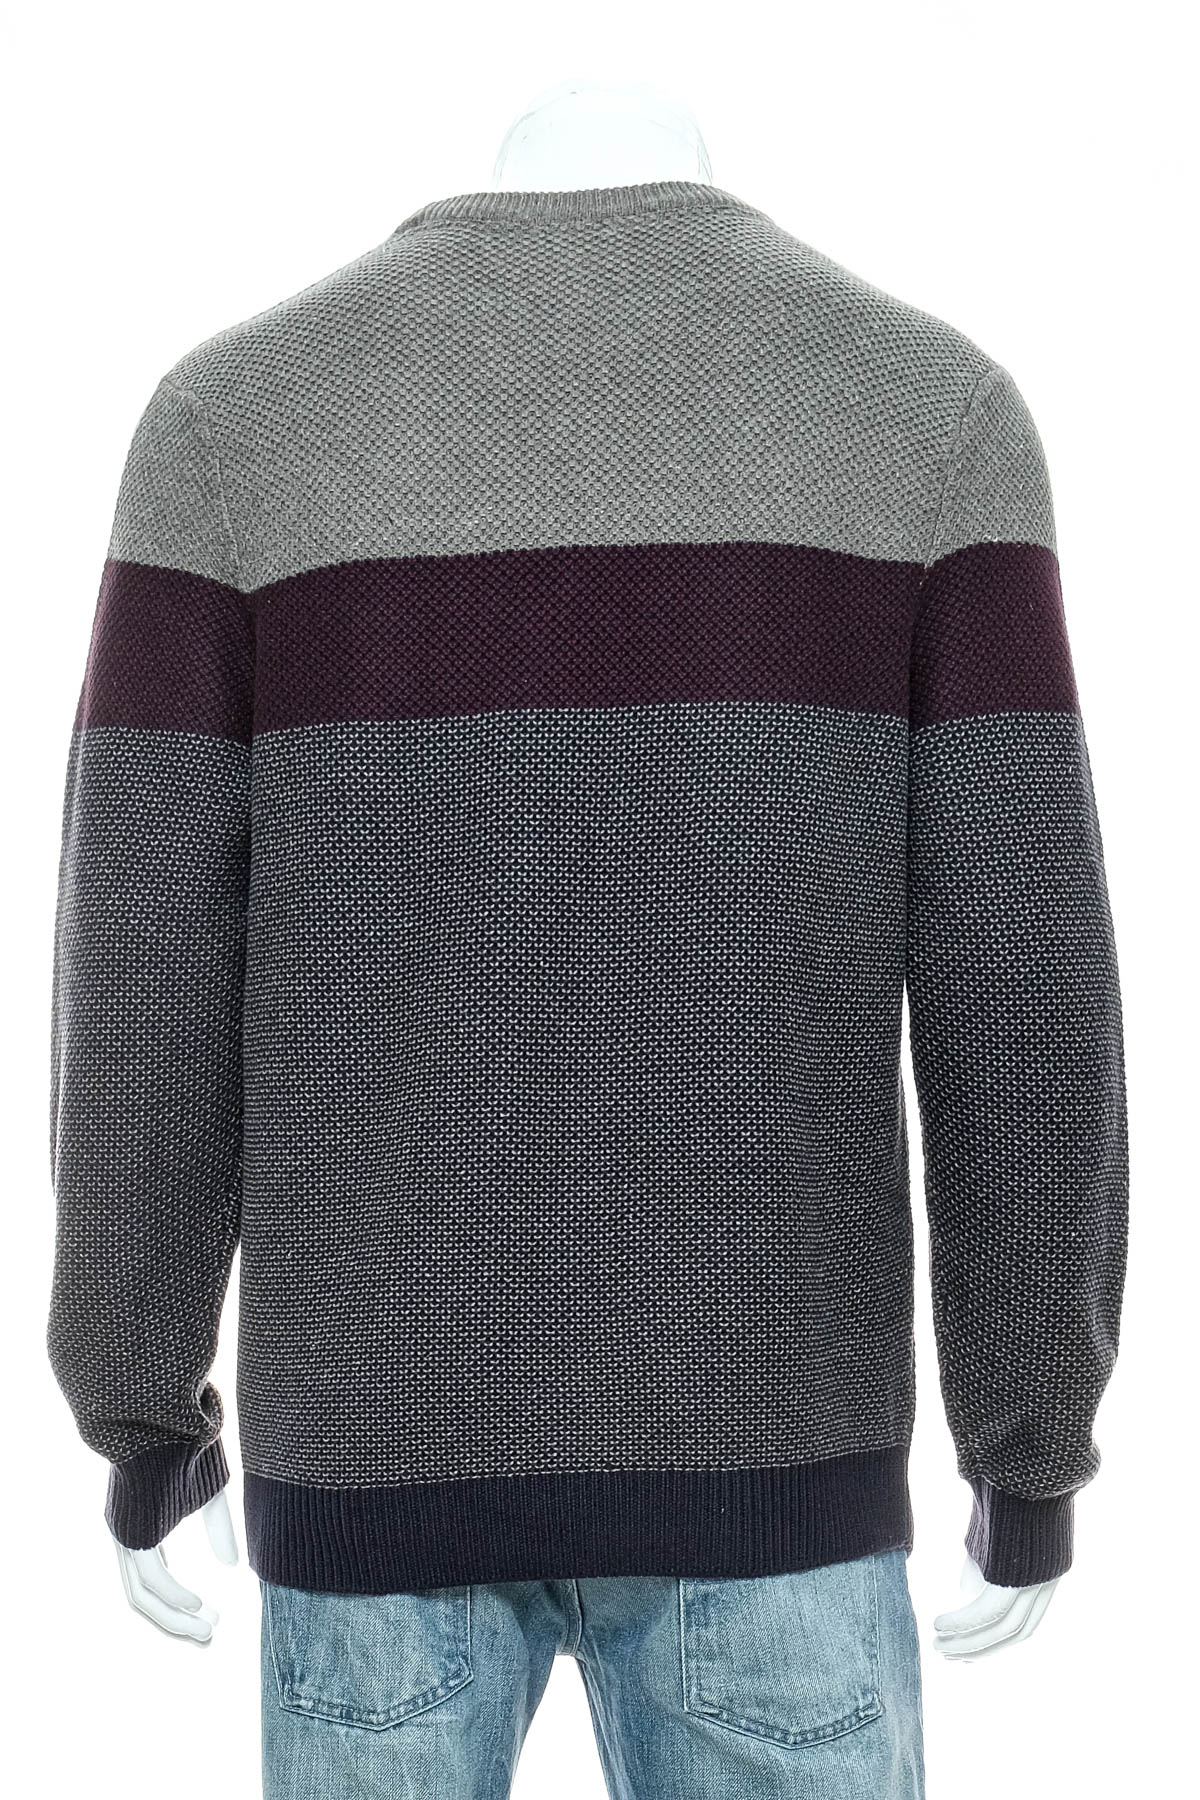 Men's sweater - Bpc Bonprix Collection - 1